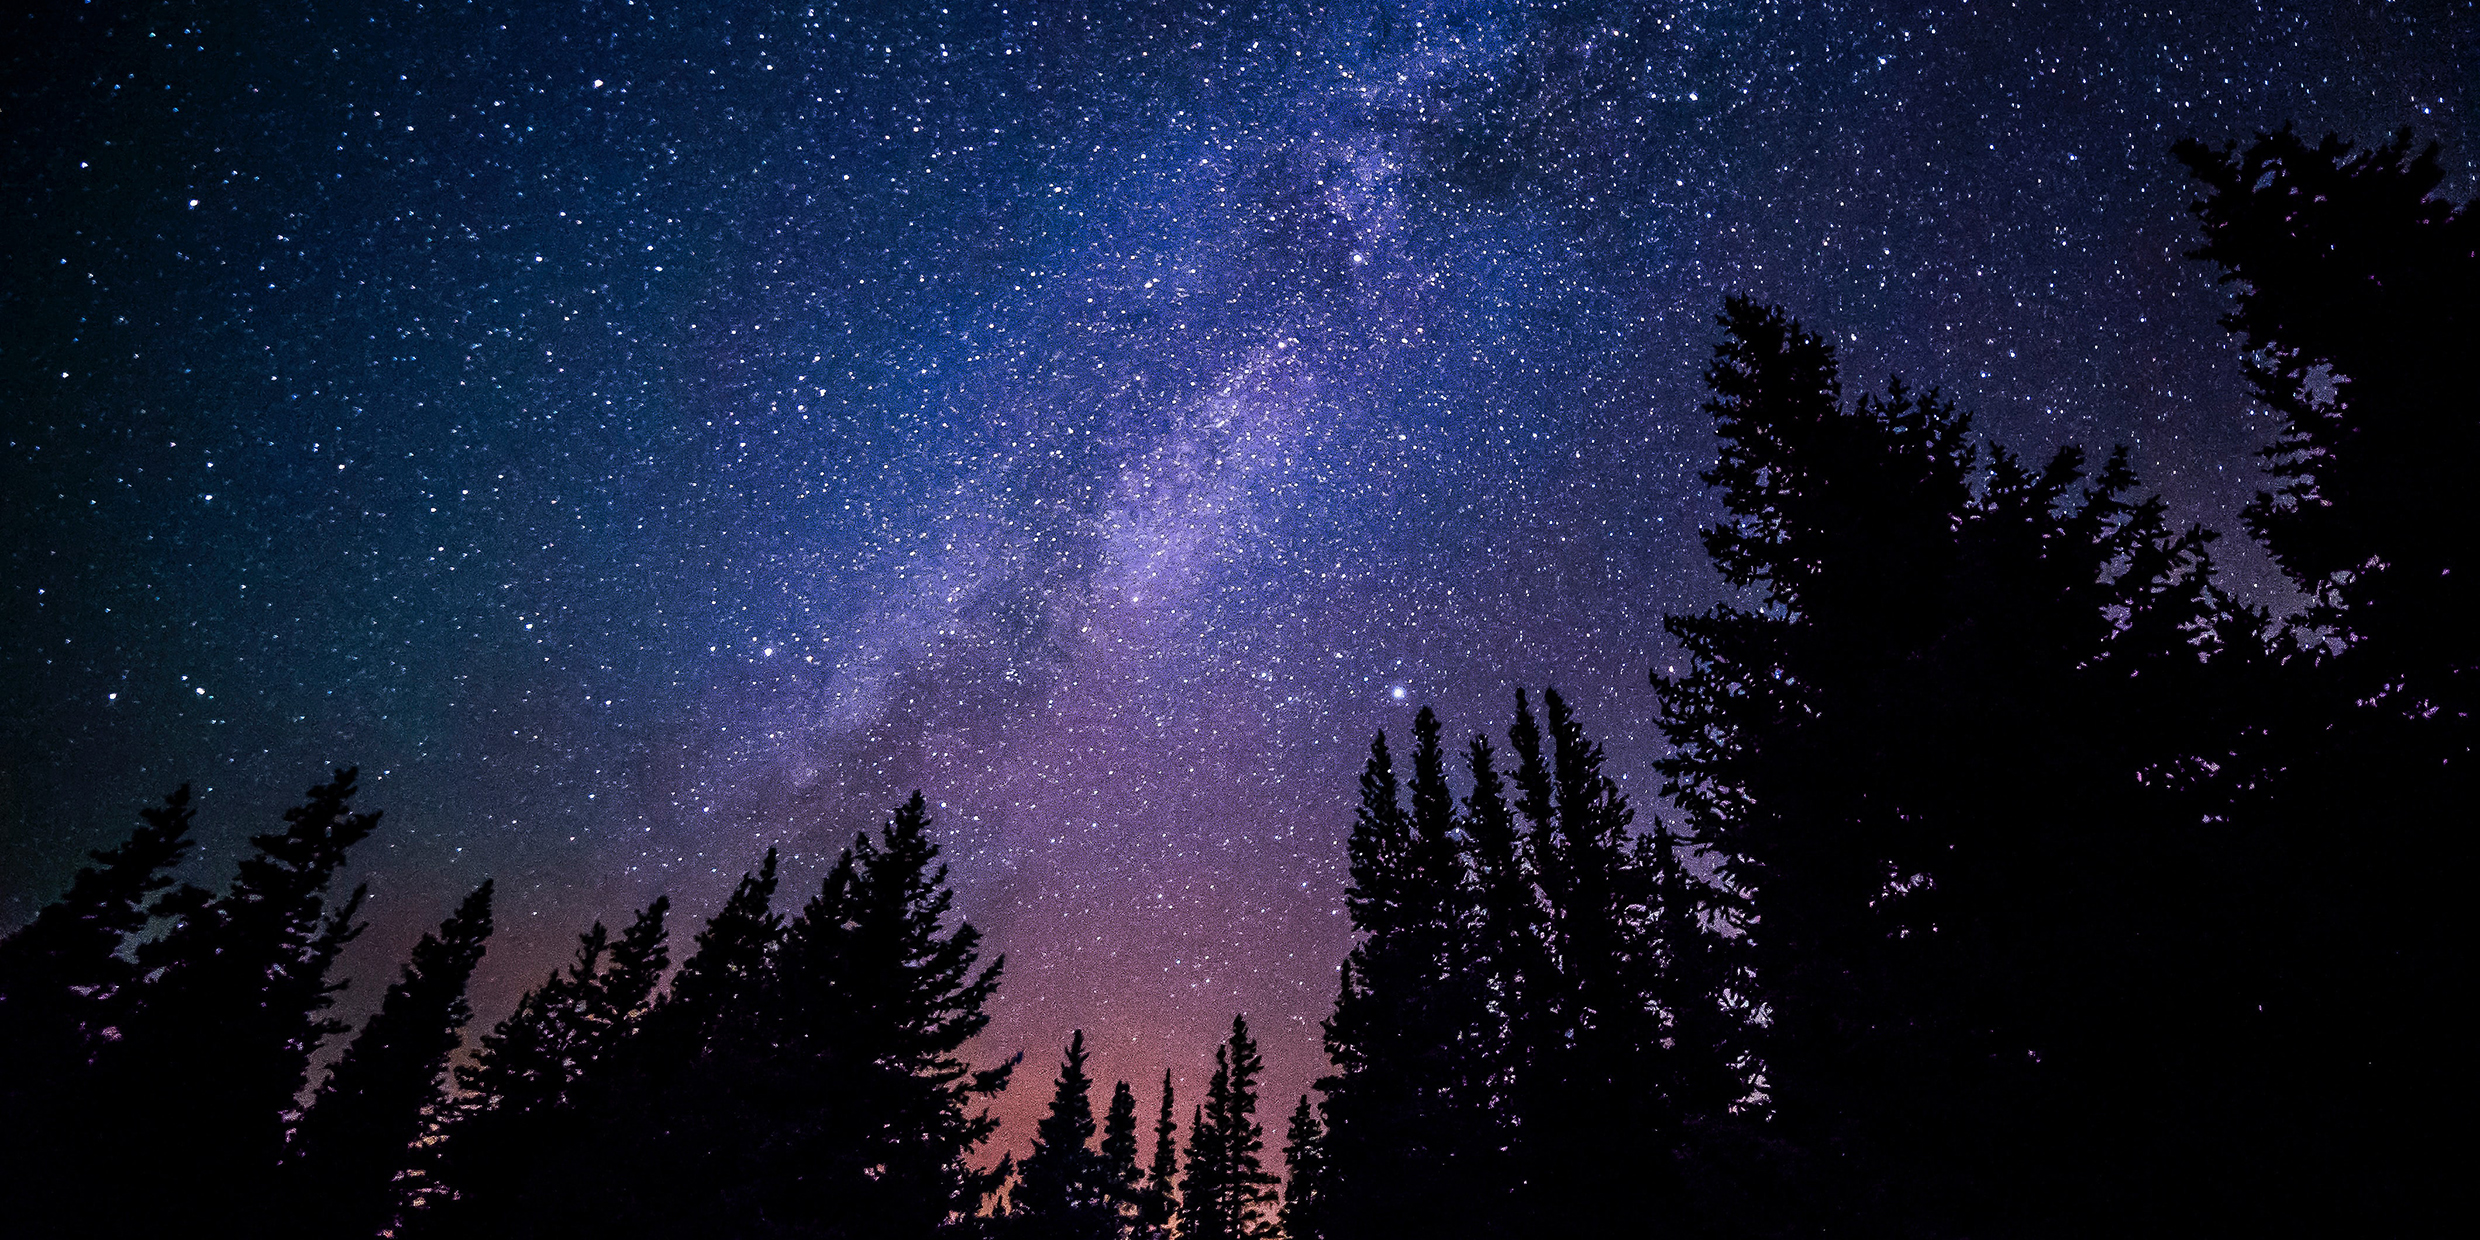 Image of the night sky awash with stars